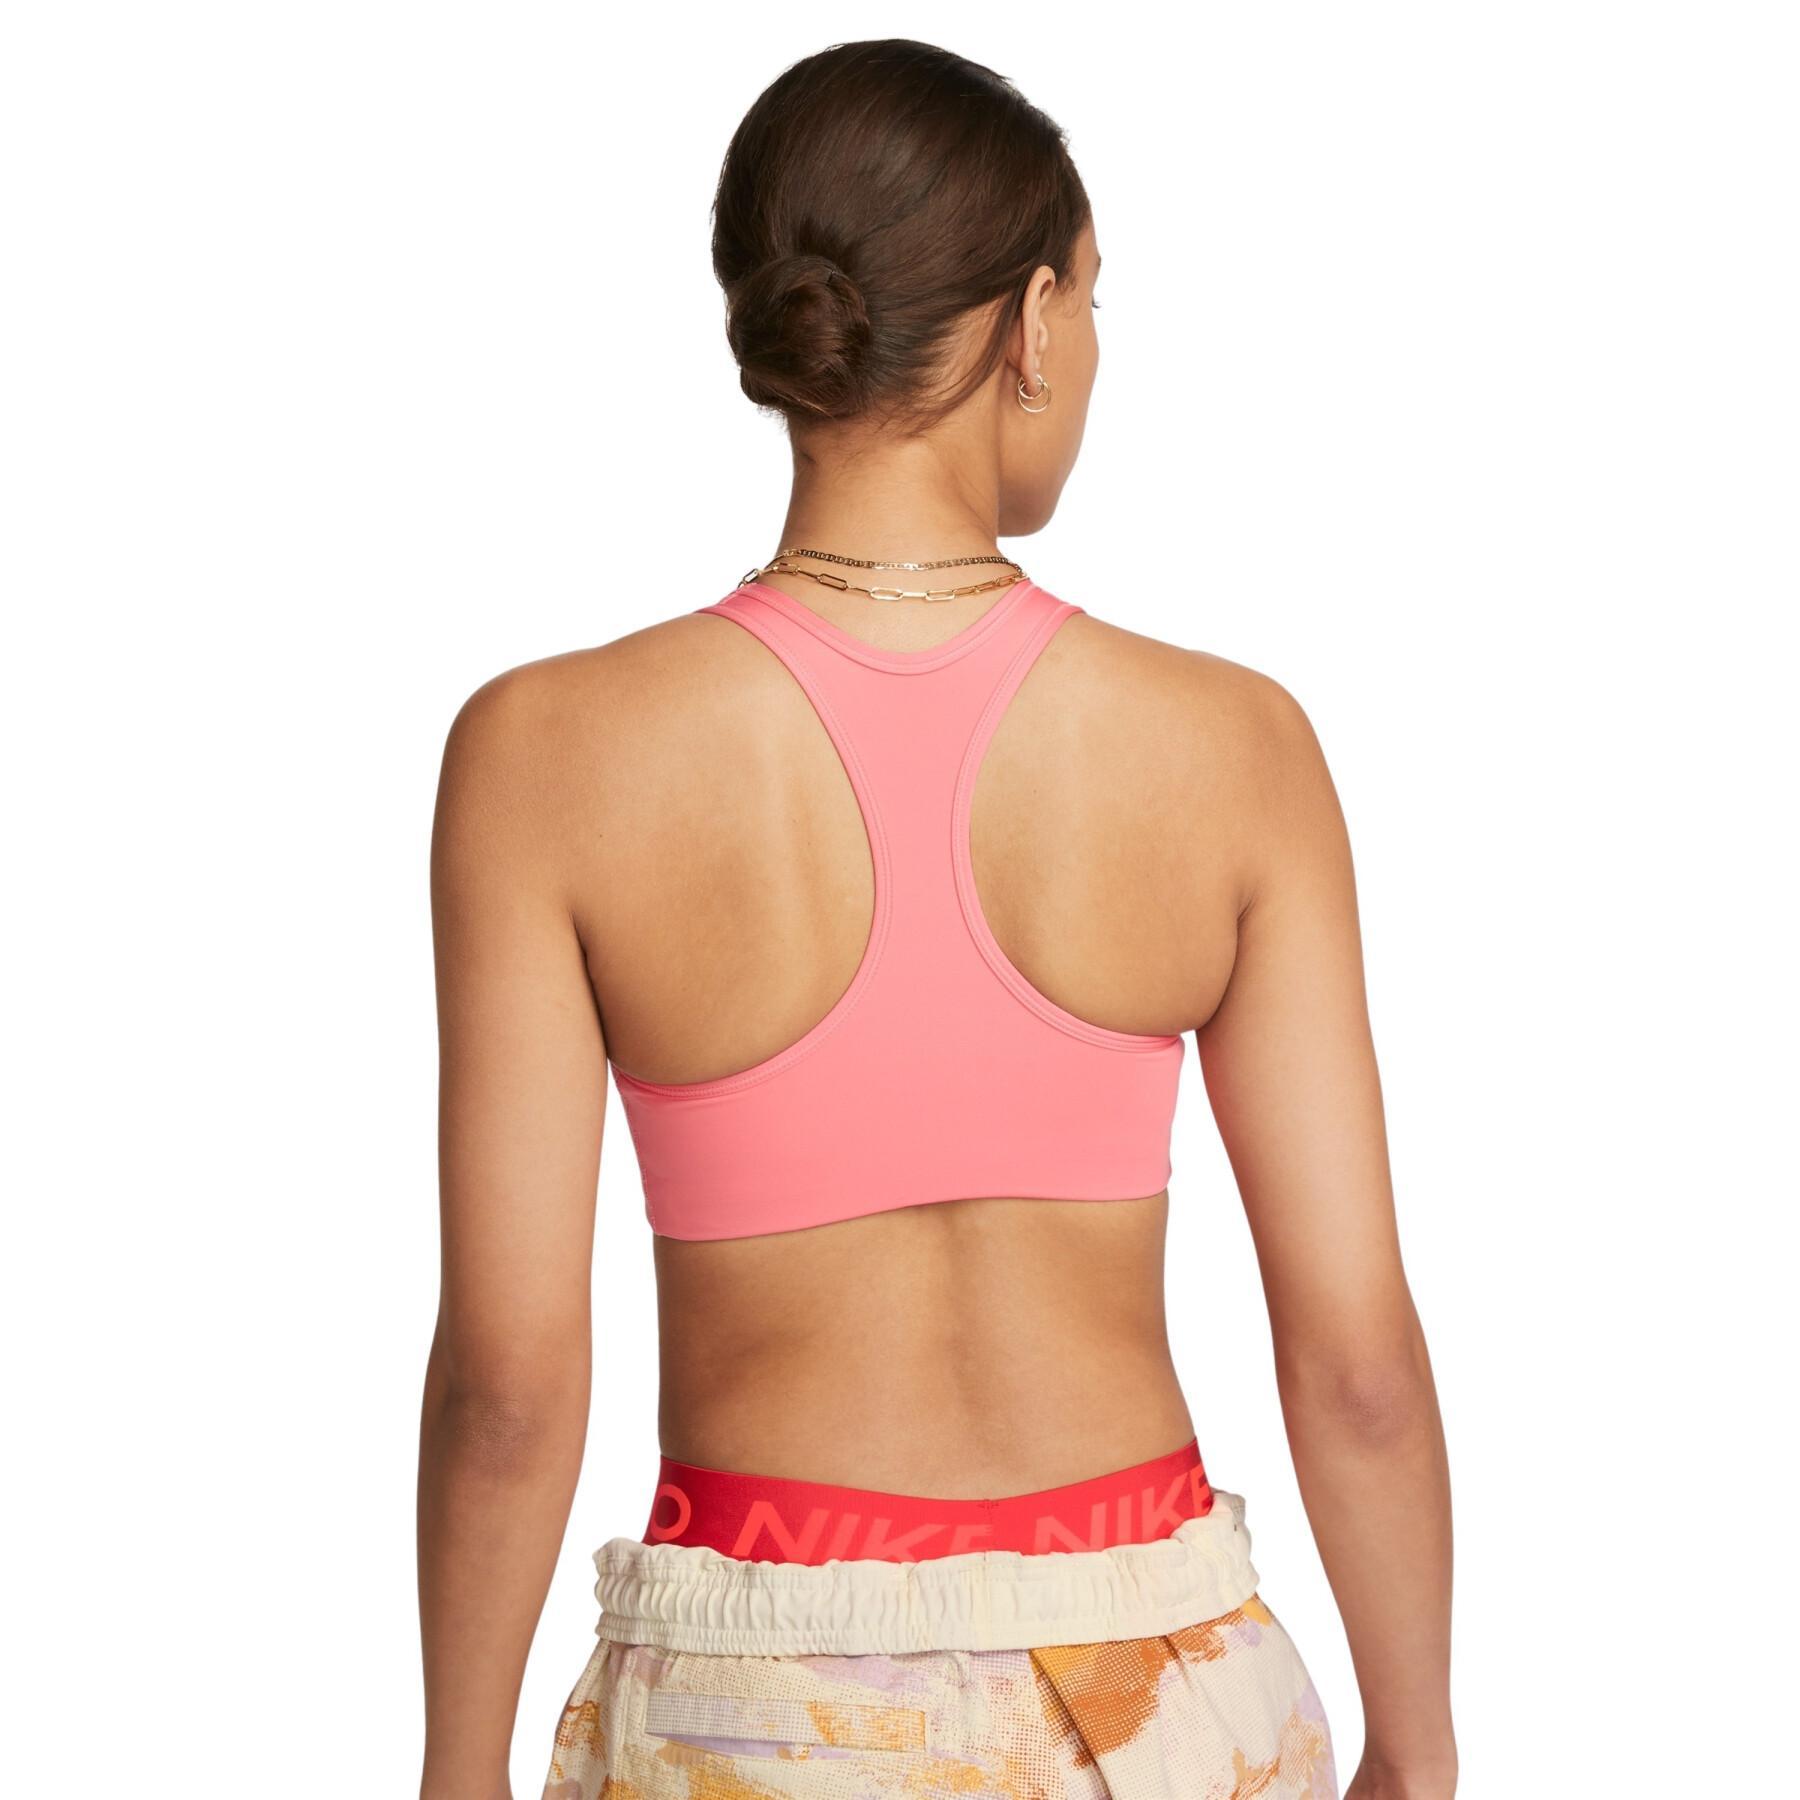 Women's bra Nike Swoosh - Textile - Handball wear